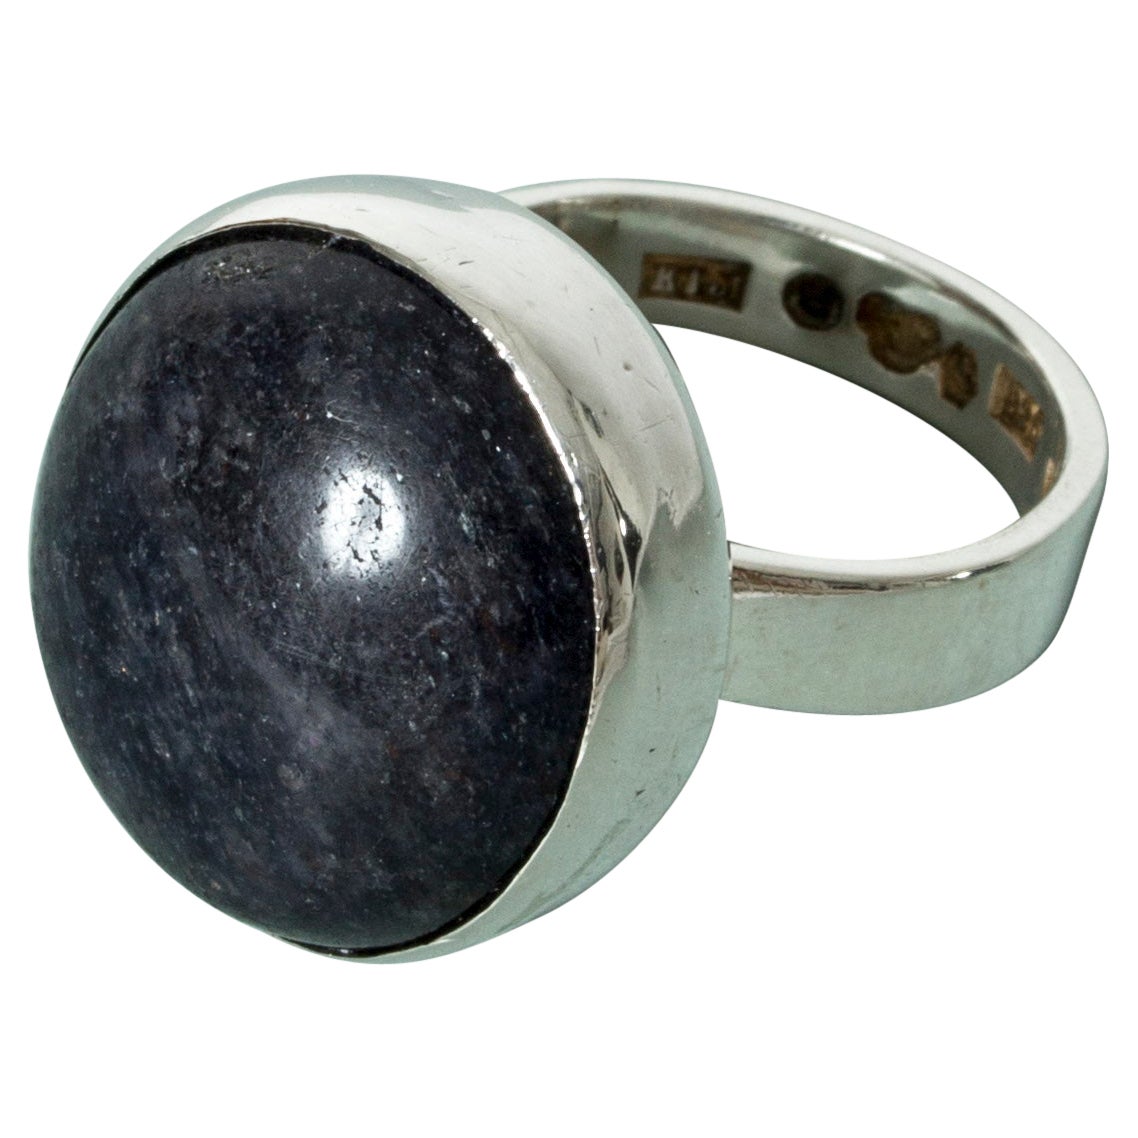 Silver and Sodalite Ring by Cecilia Johansson